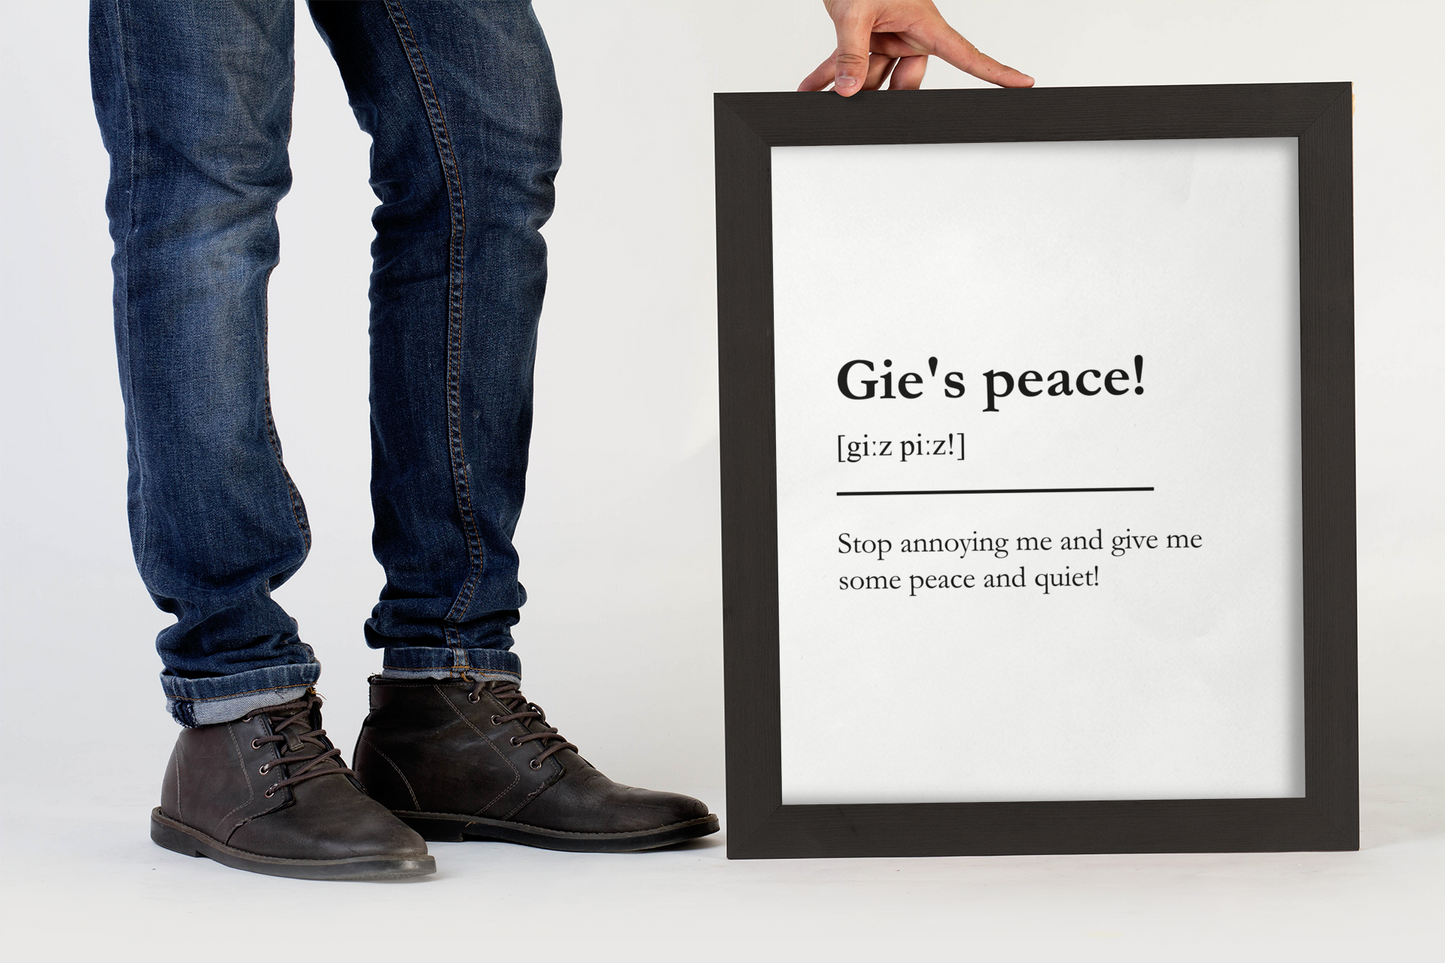 "Gie's peace!" - Scottish Slang